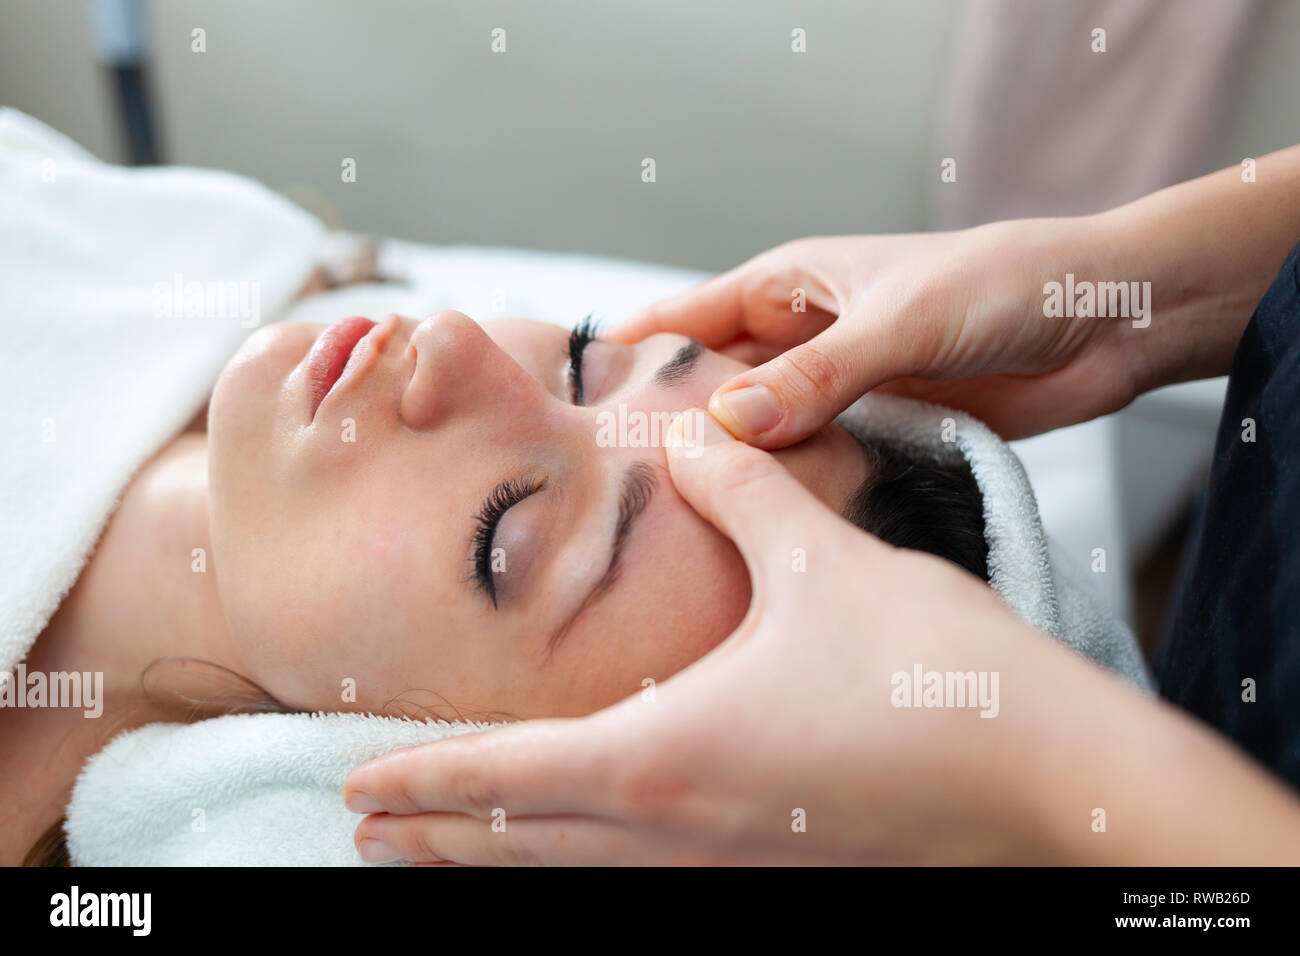 Closeup face of young woman having facial massage at spa. Stock Photo